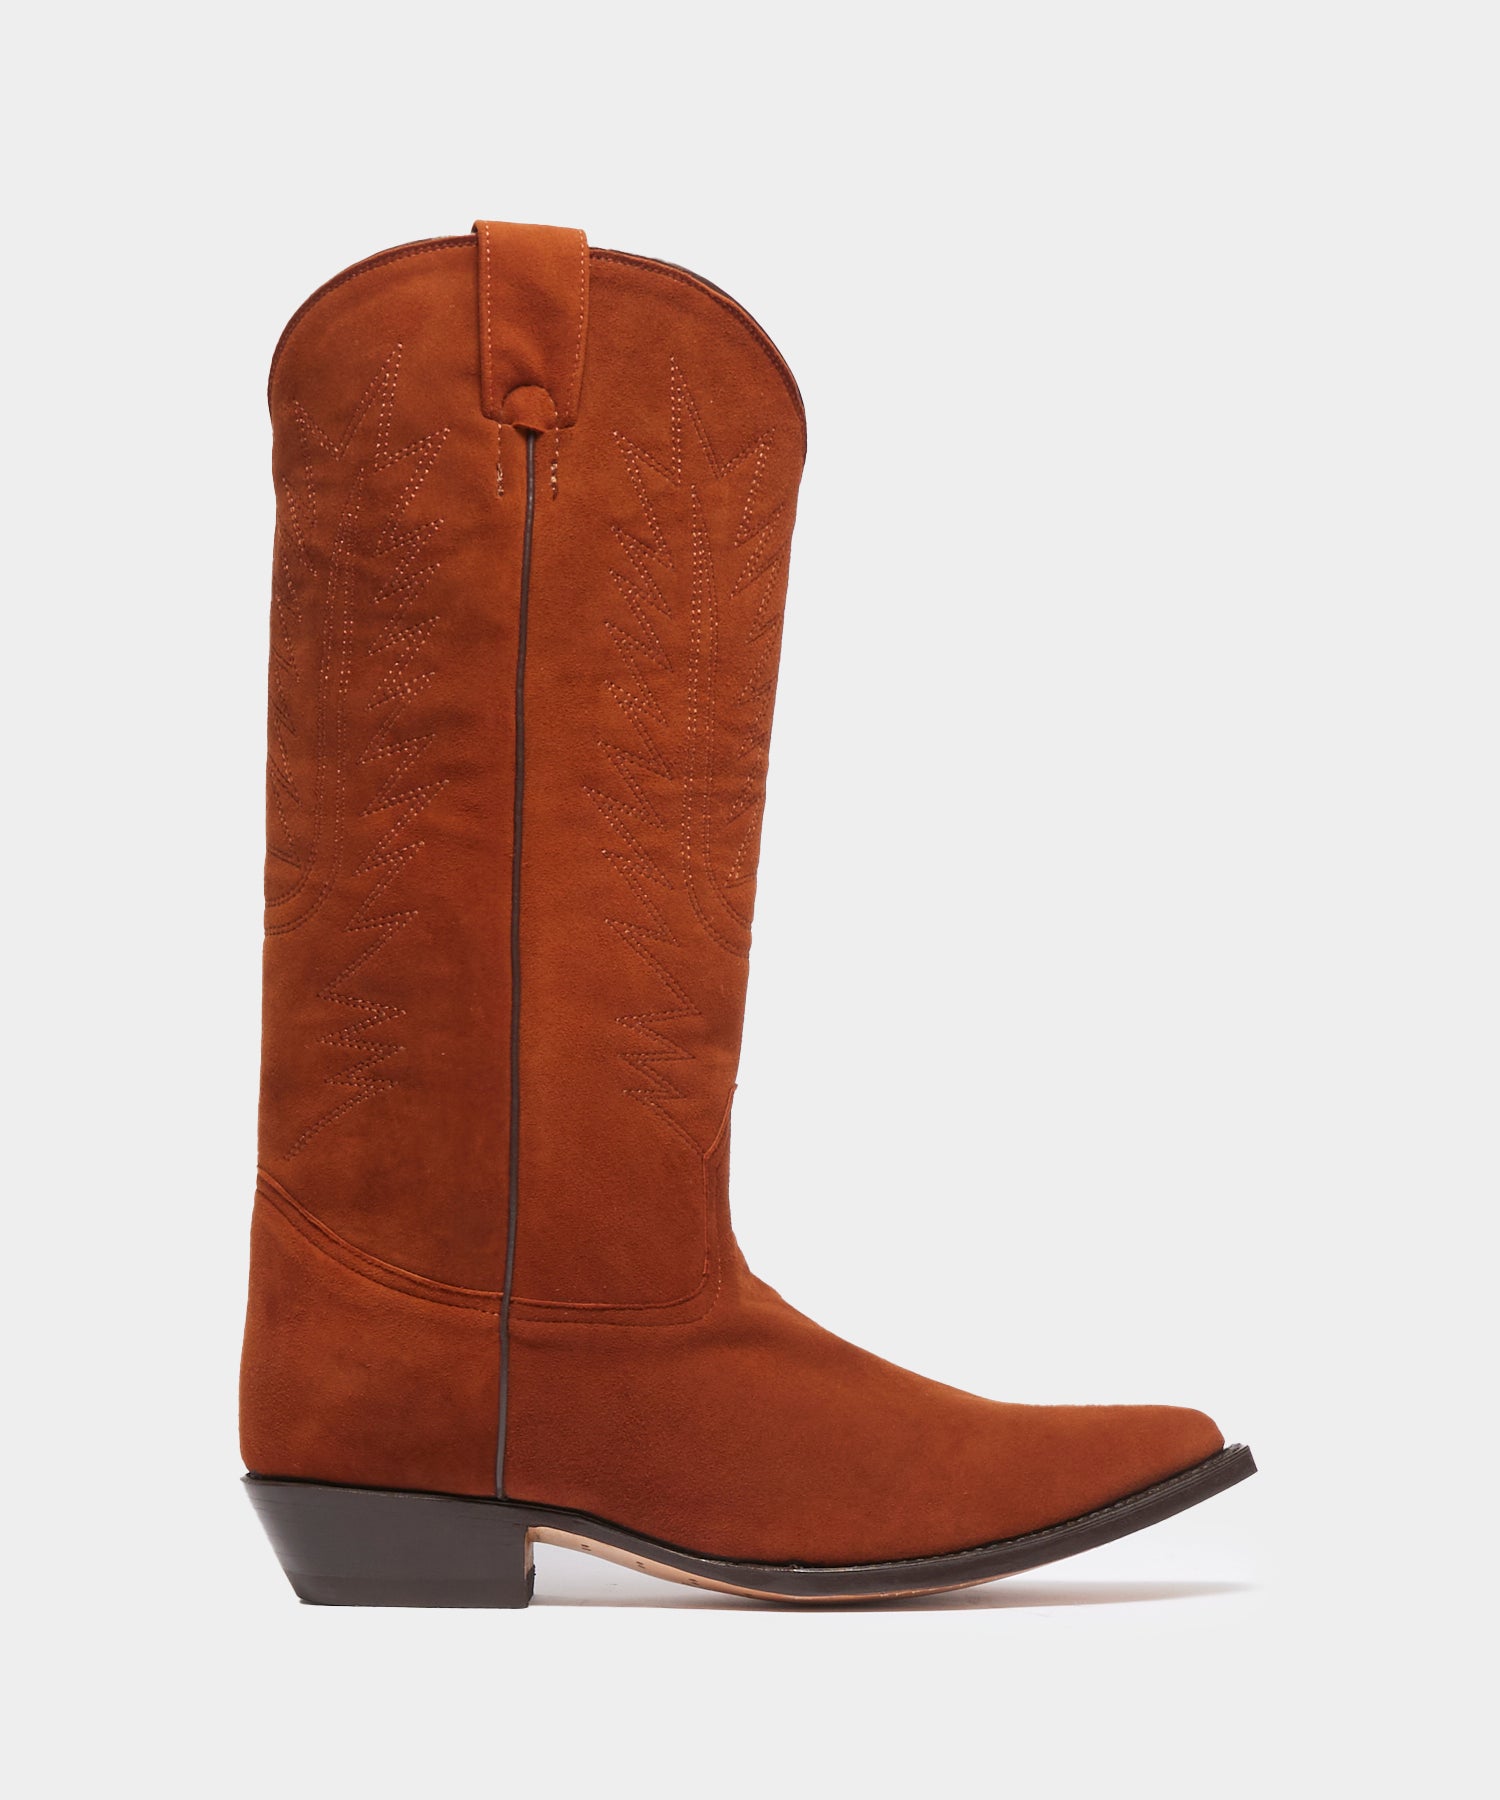 Yuketen Cowboy Boots in Warm Cognac